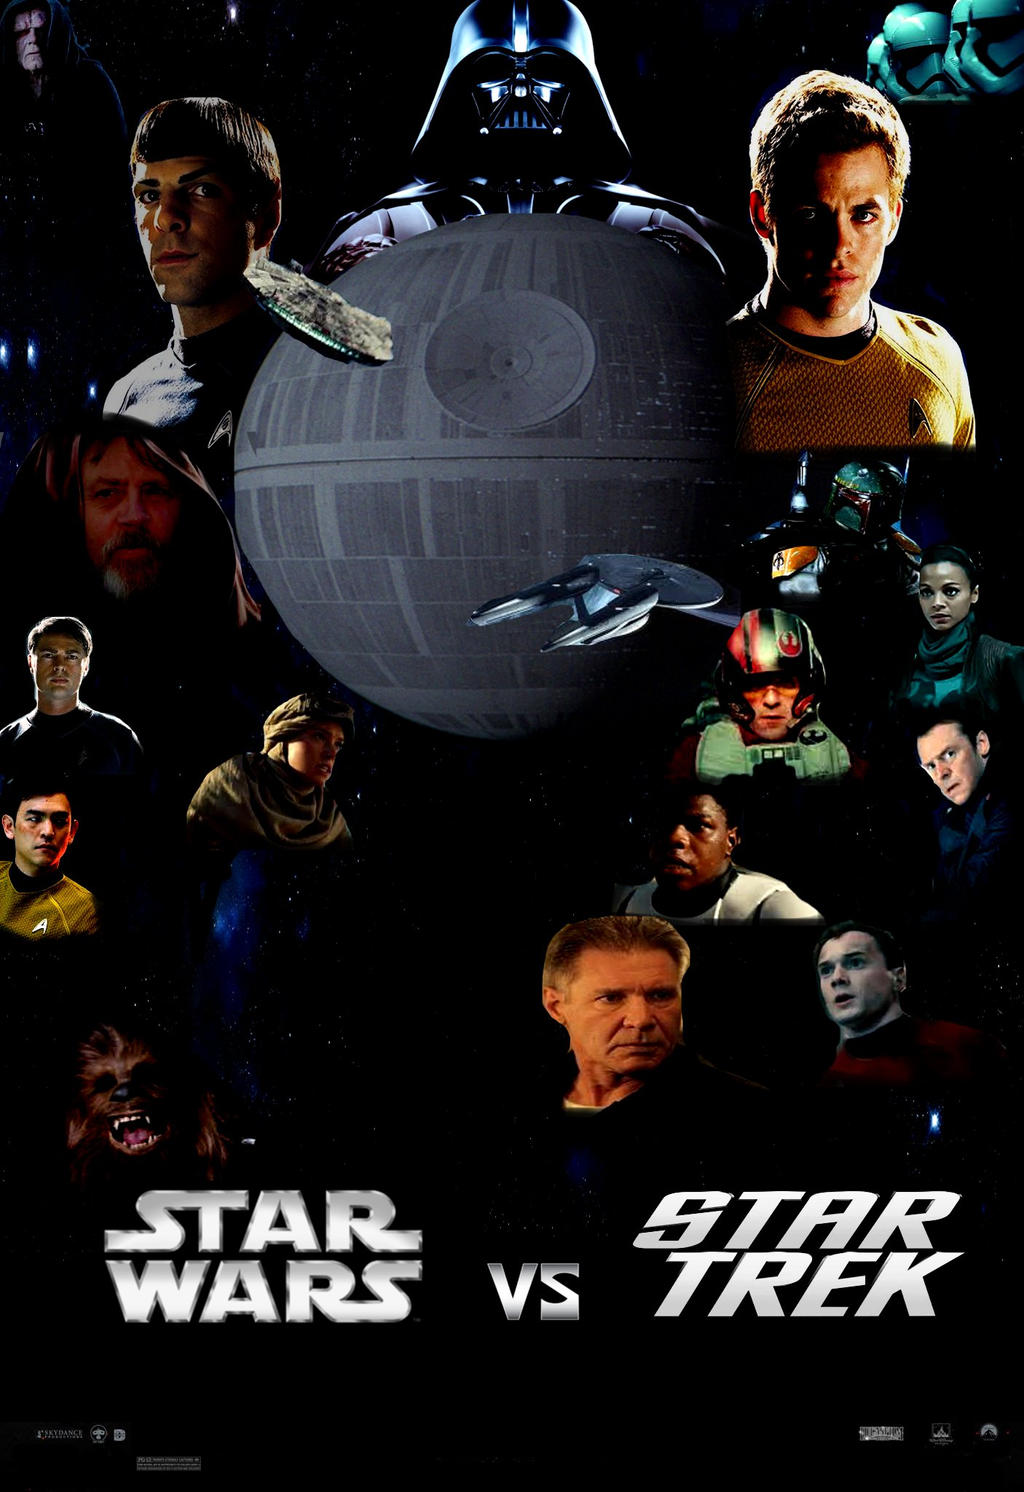 Star Wars vs. Star Trek poster by SteveIrwinFan96 on DeviantArt